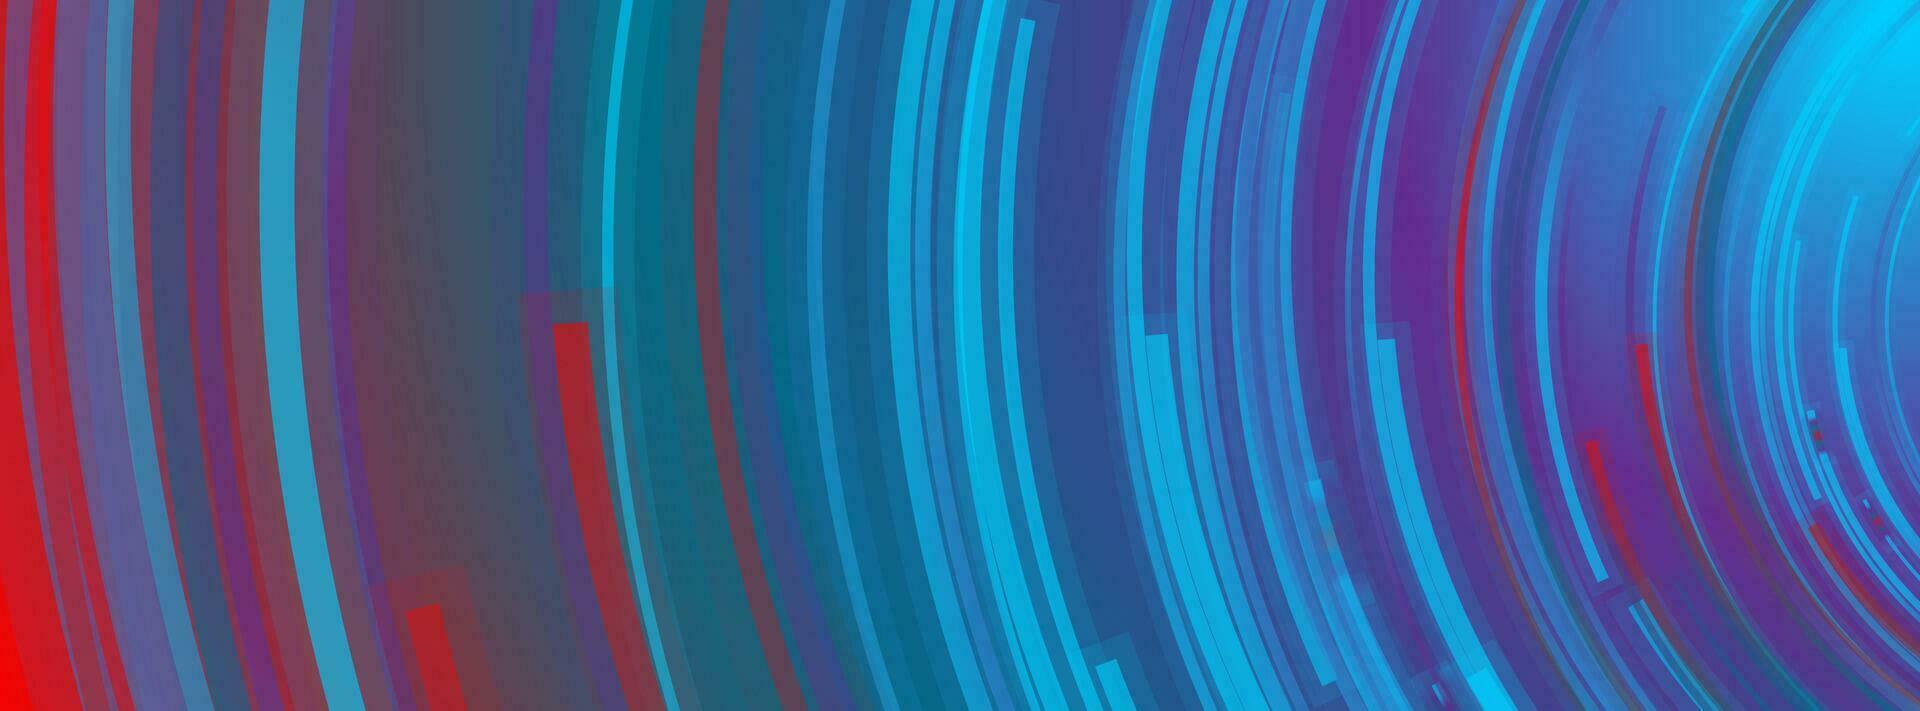 Bright circular lines abstract futuristic tech banner vector